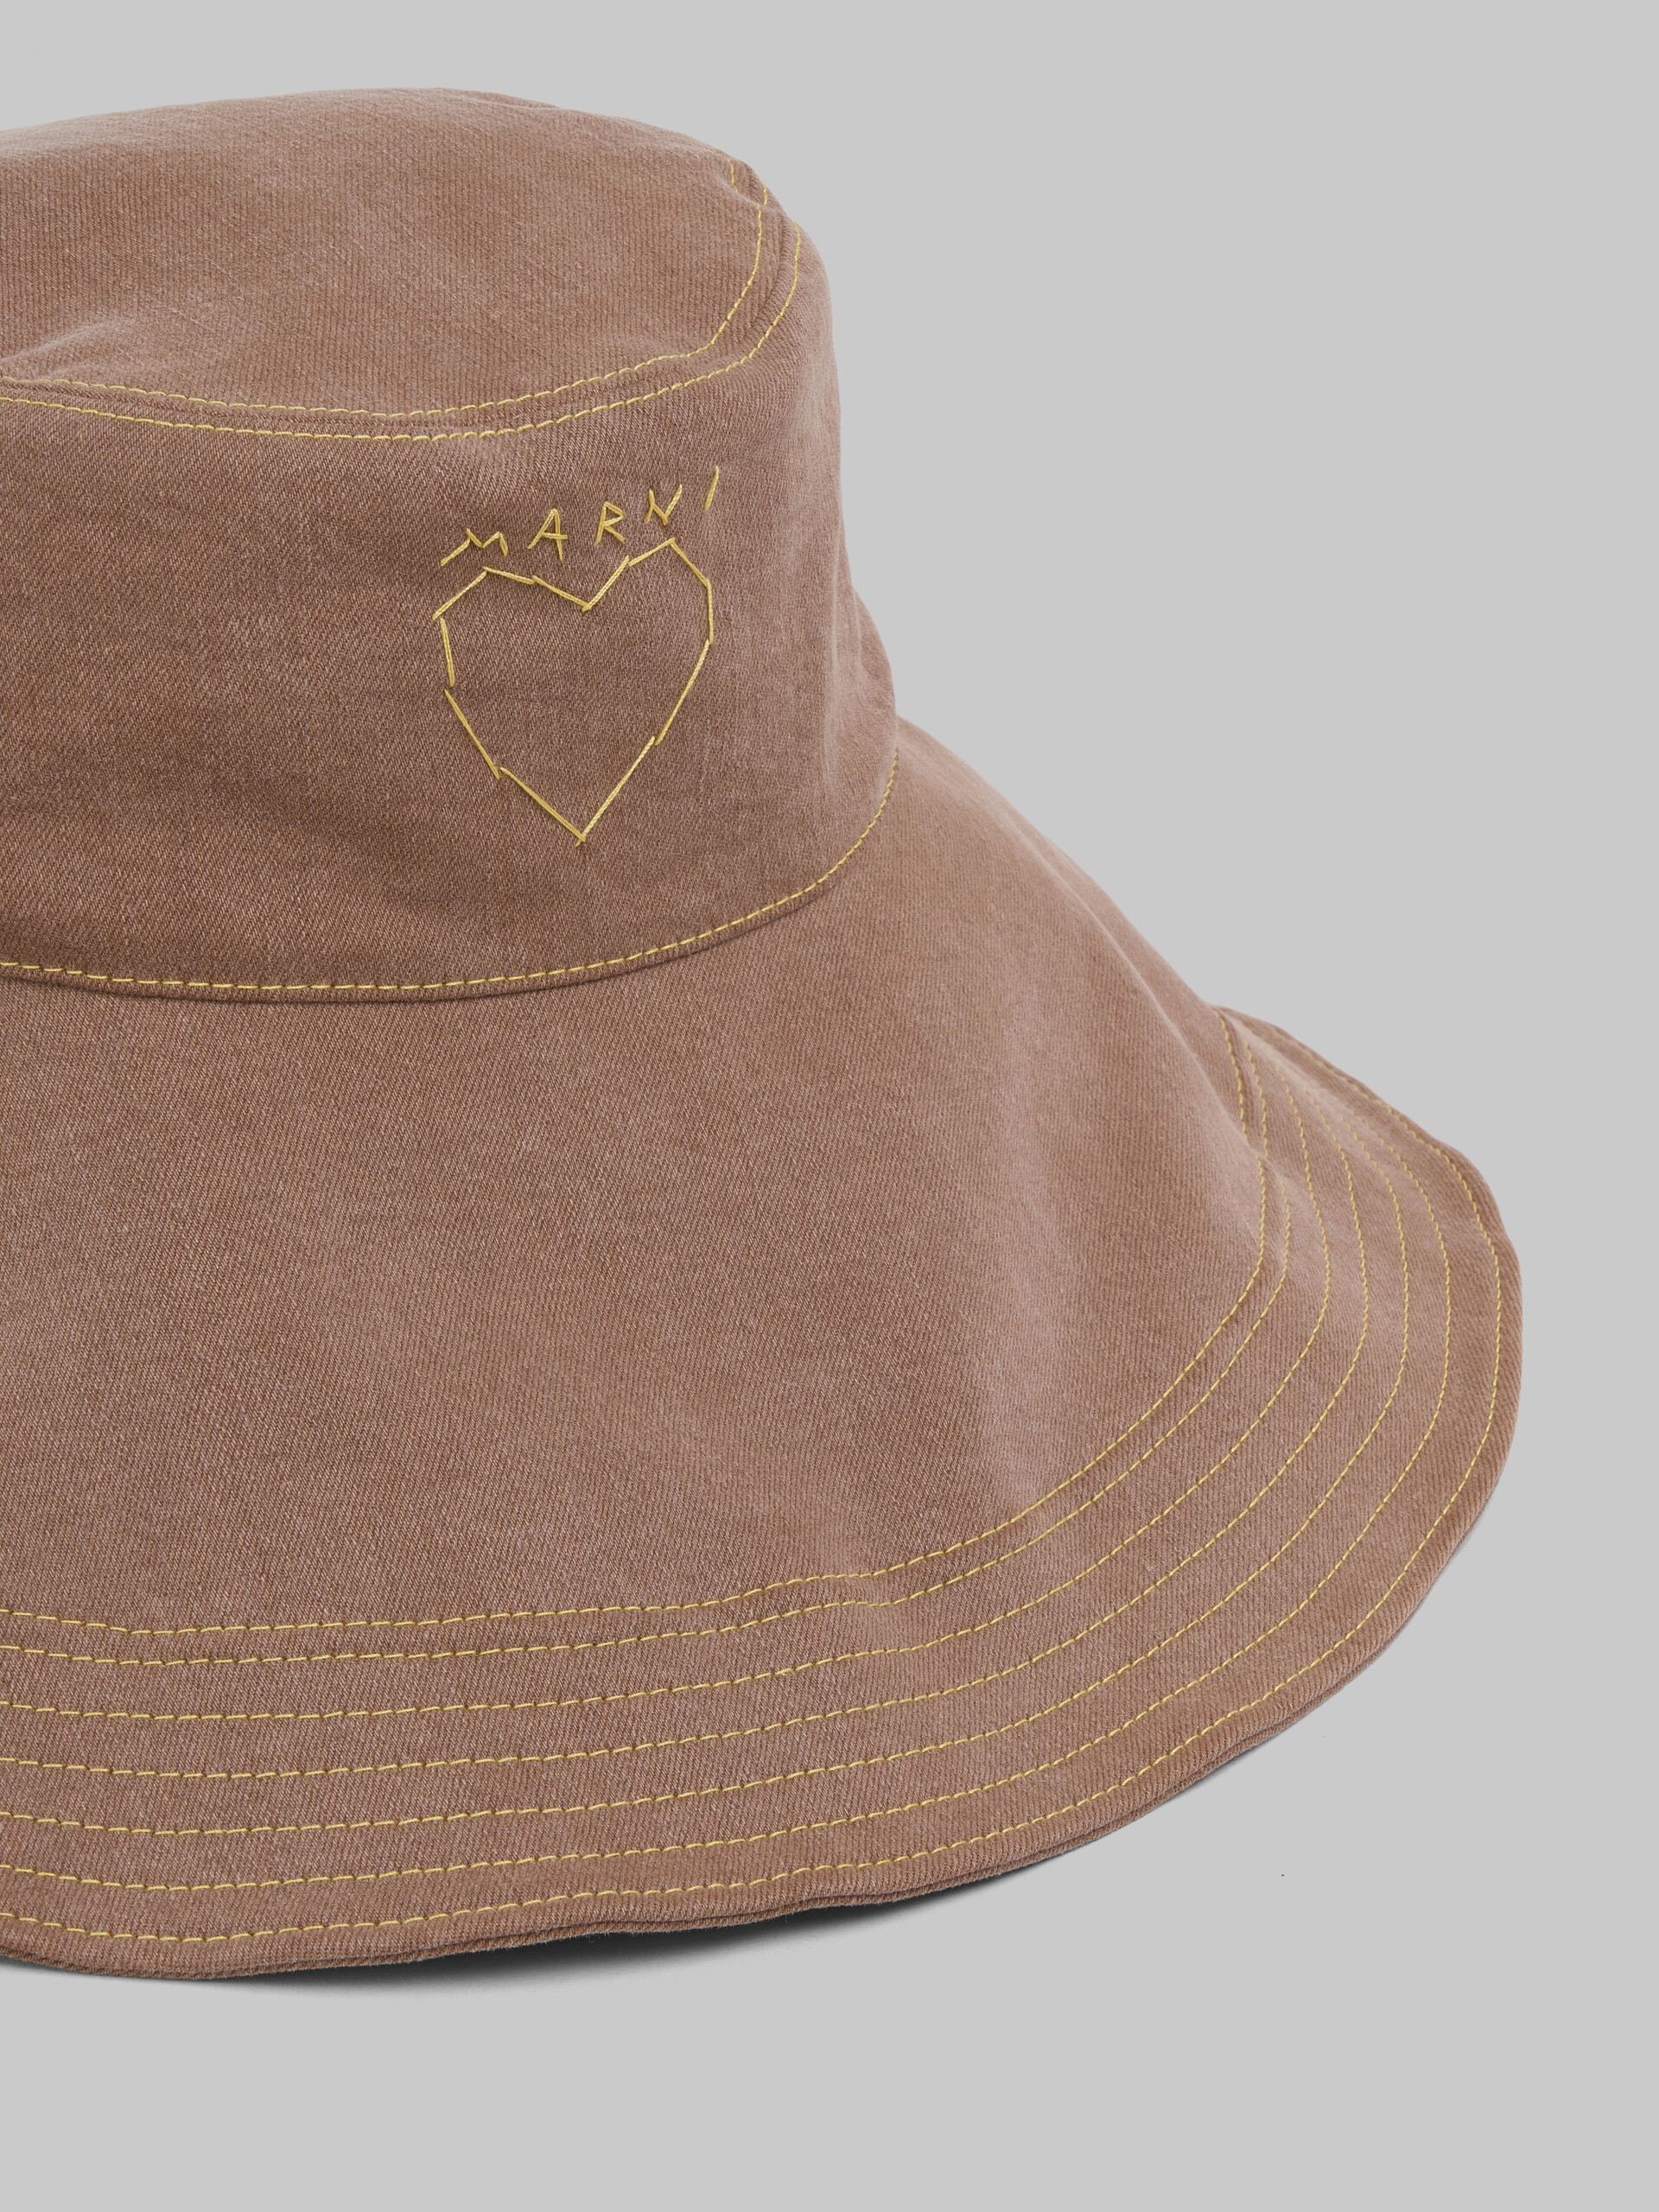 Brown organic denim hat - Hats - Image 4